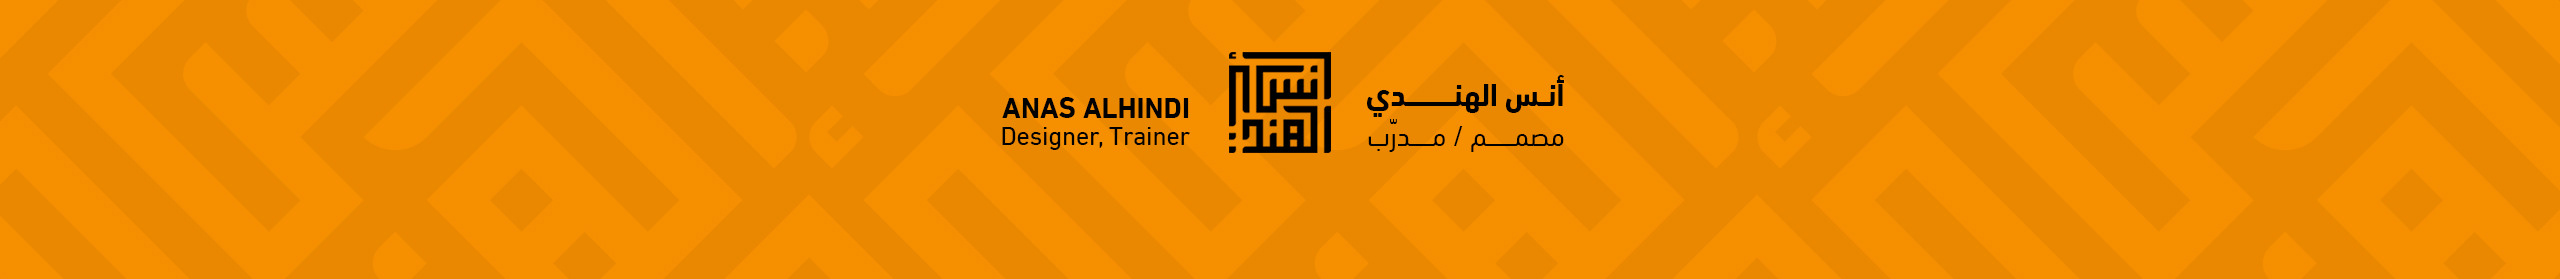 Anas Al Hindi's profile banner